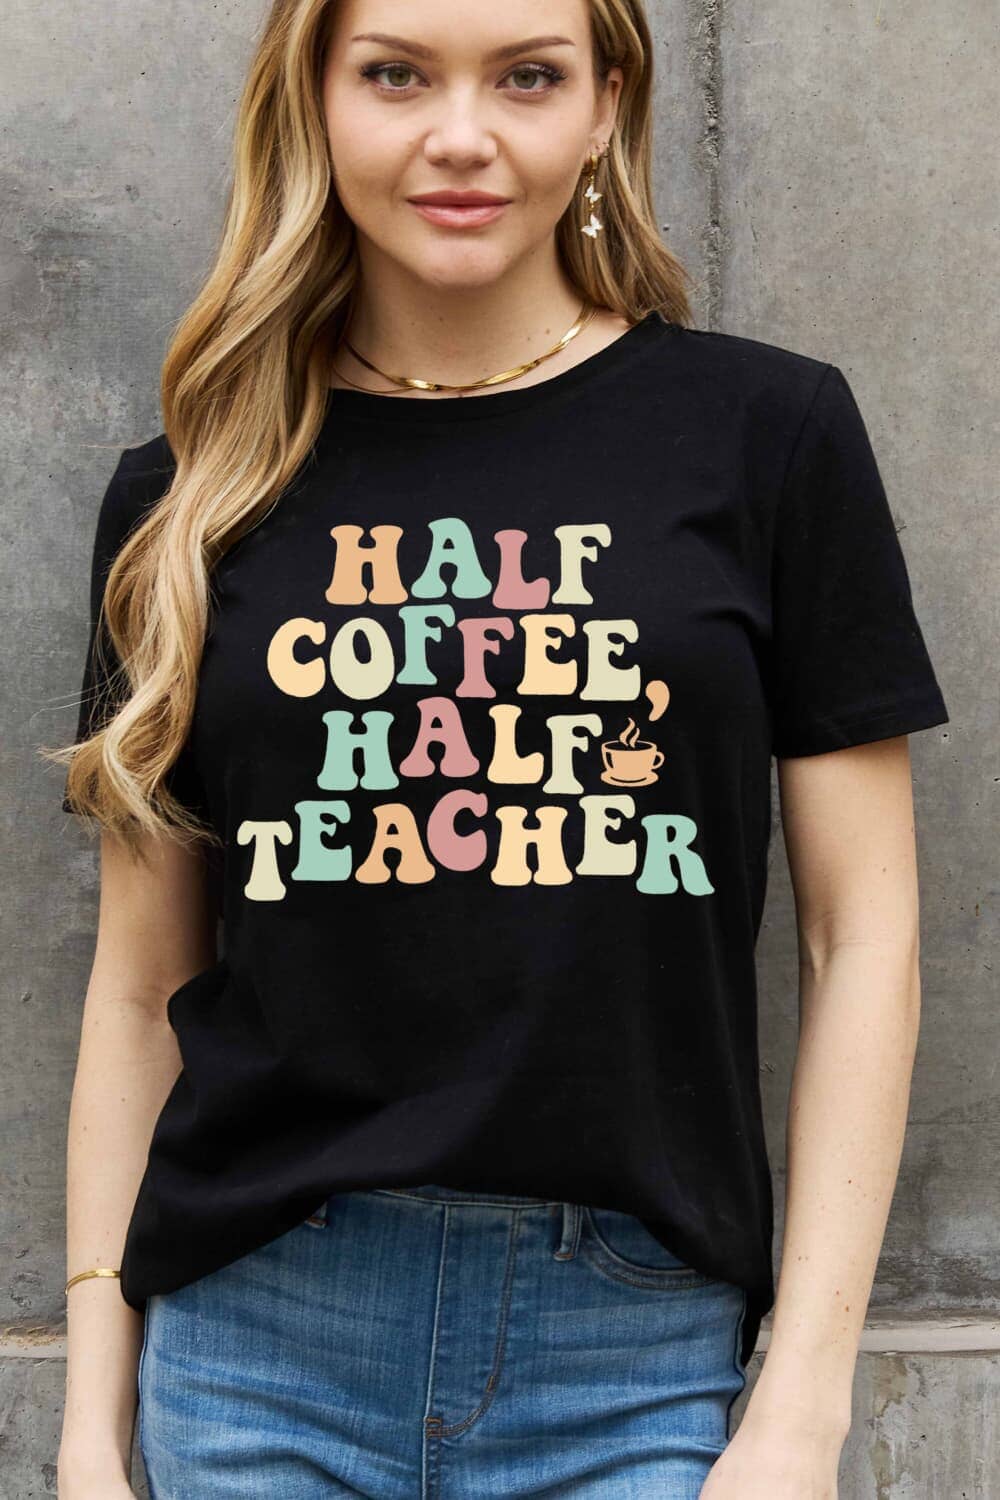 Teacher Graphic T-Shirts, Crewneck Sweatshirts, Hoodies, & More